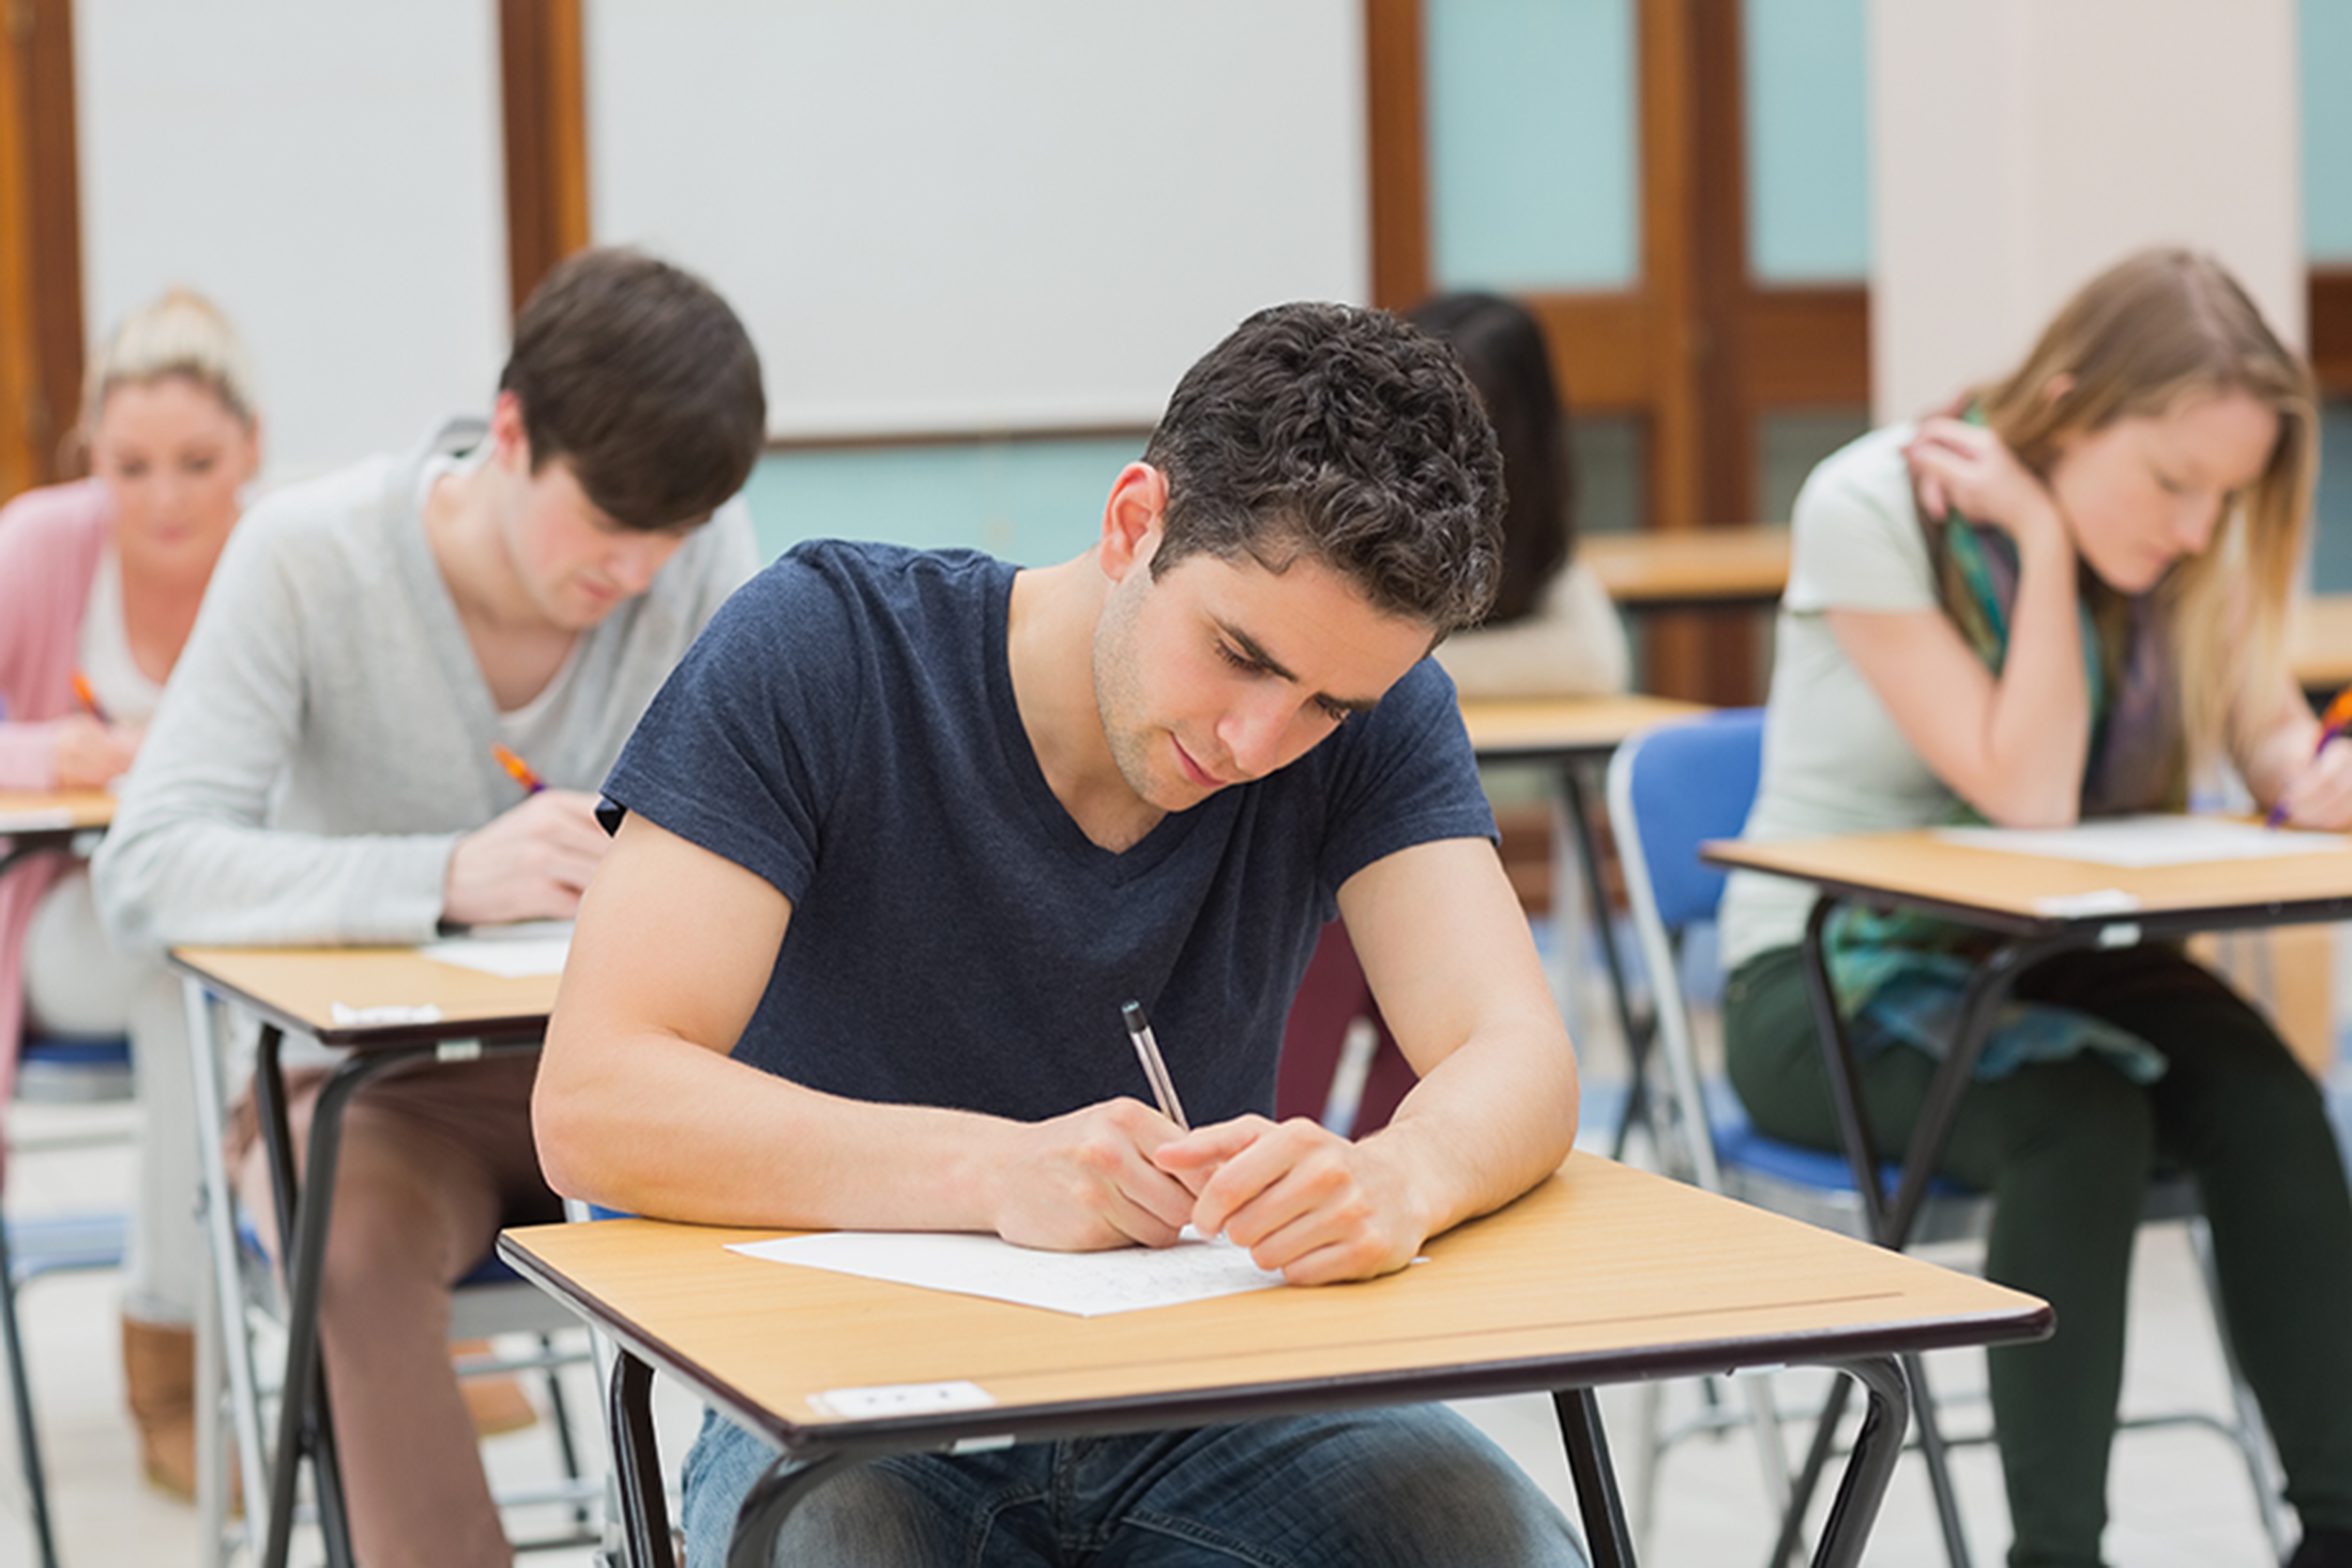 Students sat at a desk during an examination